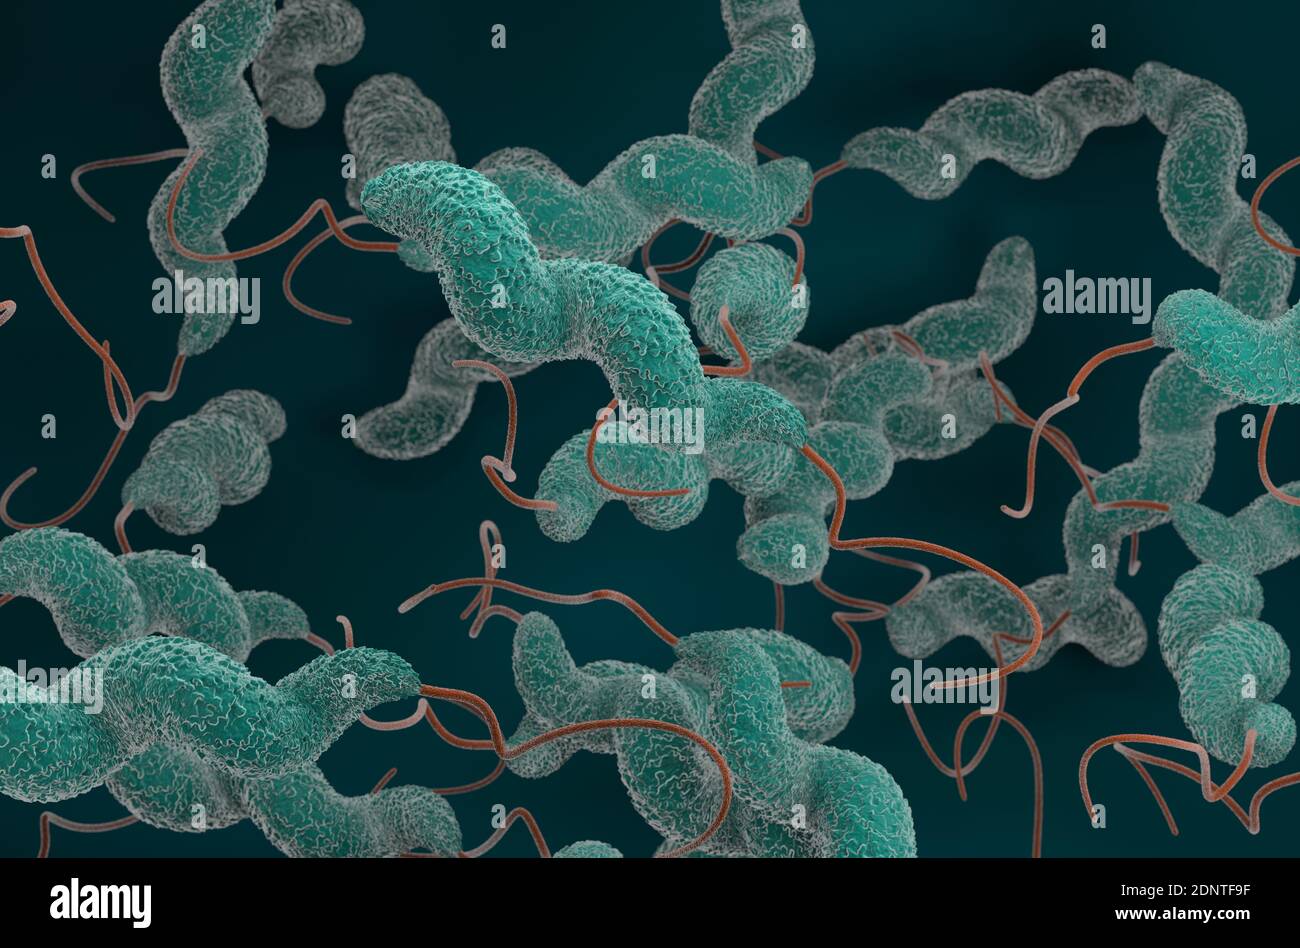 Campylobacter jejuni bacteria 3d render illustration Stock Photo